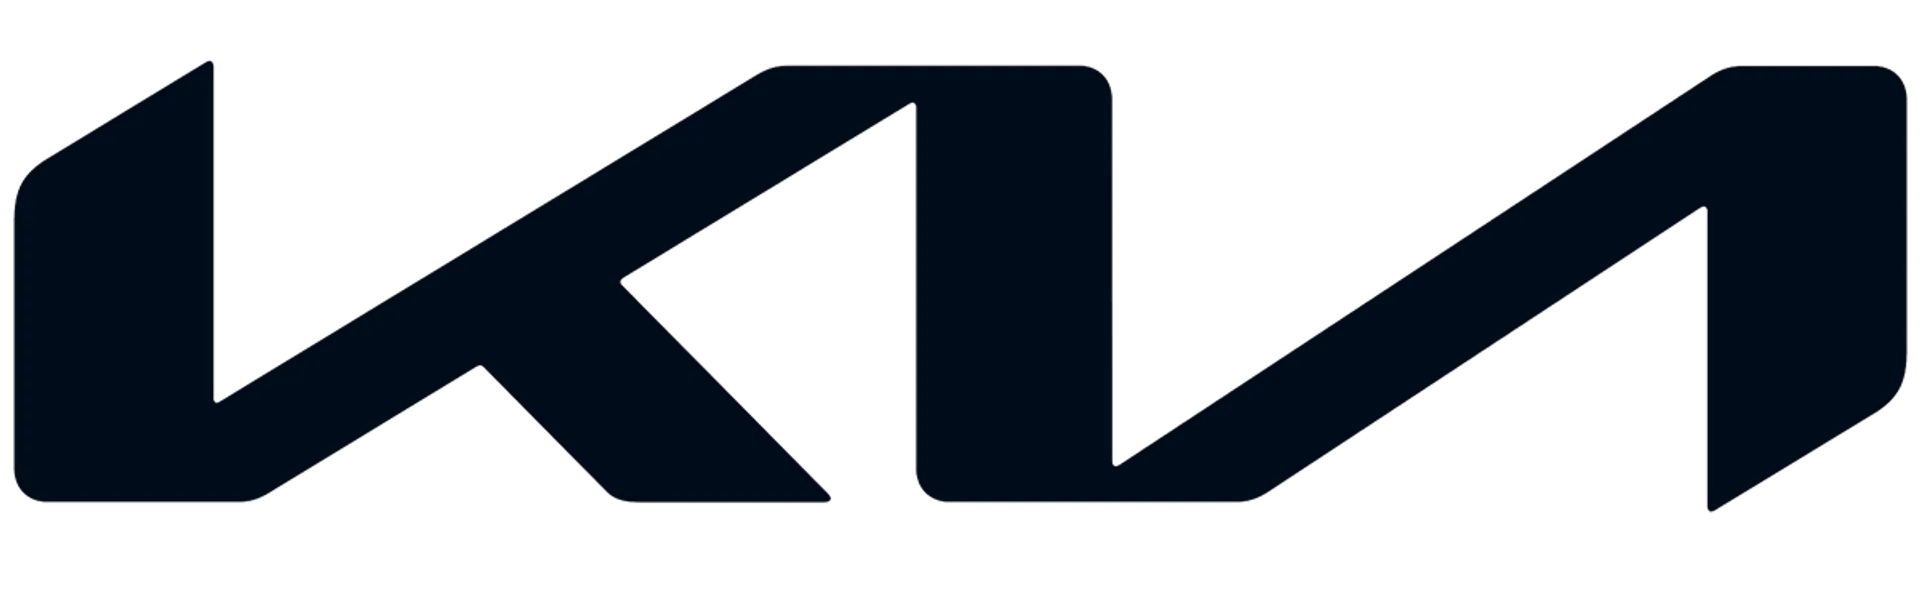 KIA logo die aktuell Prospekt